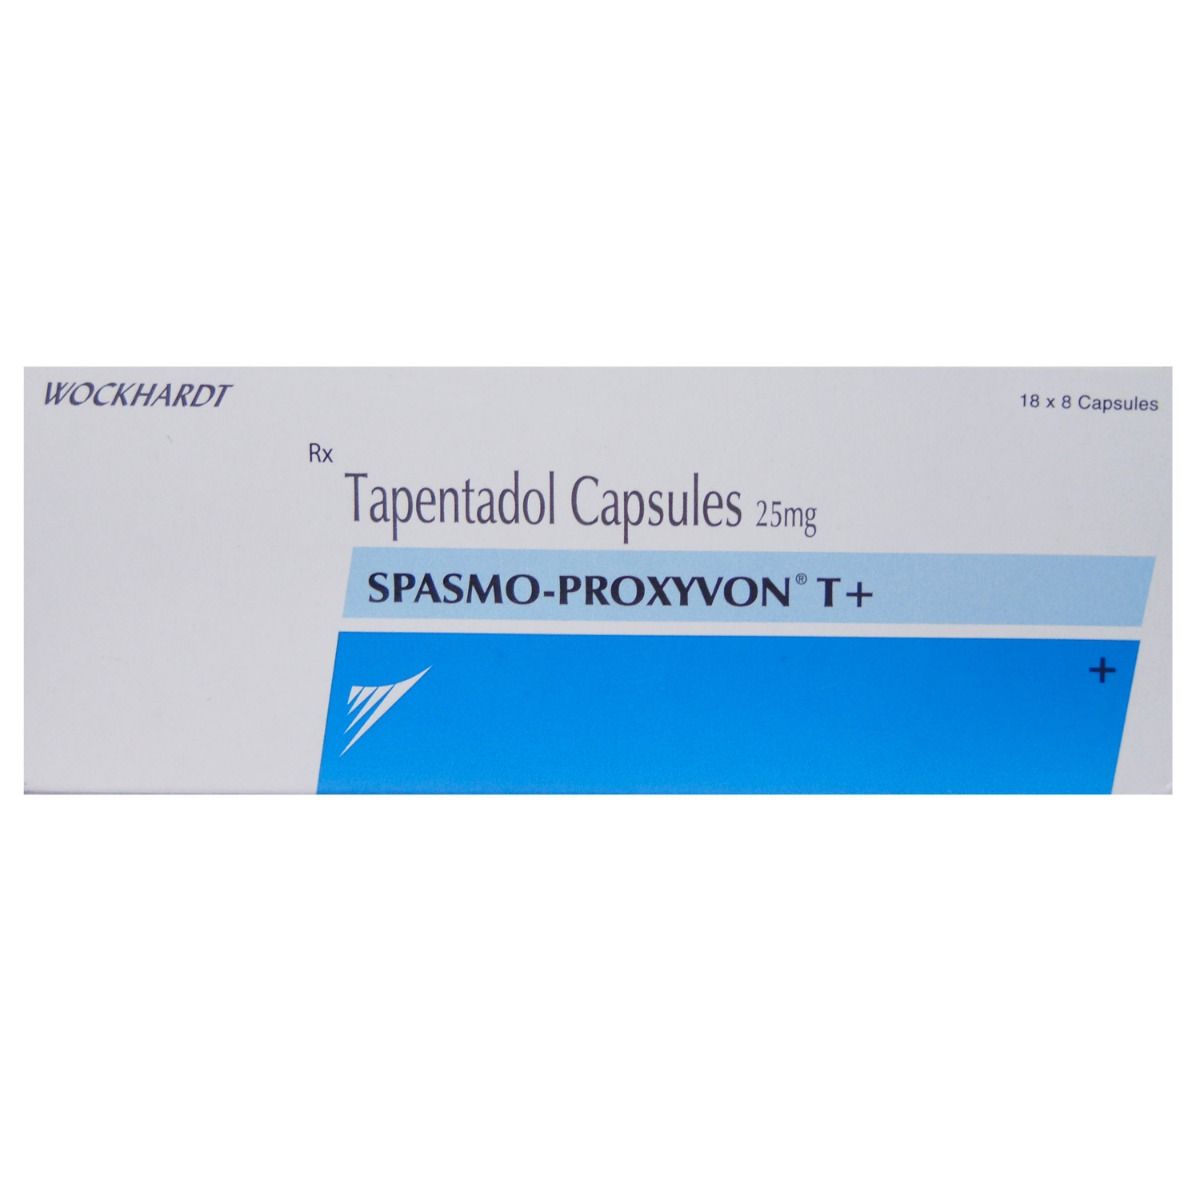 SPASMO PROXYVON T+25MG CAPSULE 8'S, Pack of 8 CAPSULES